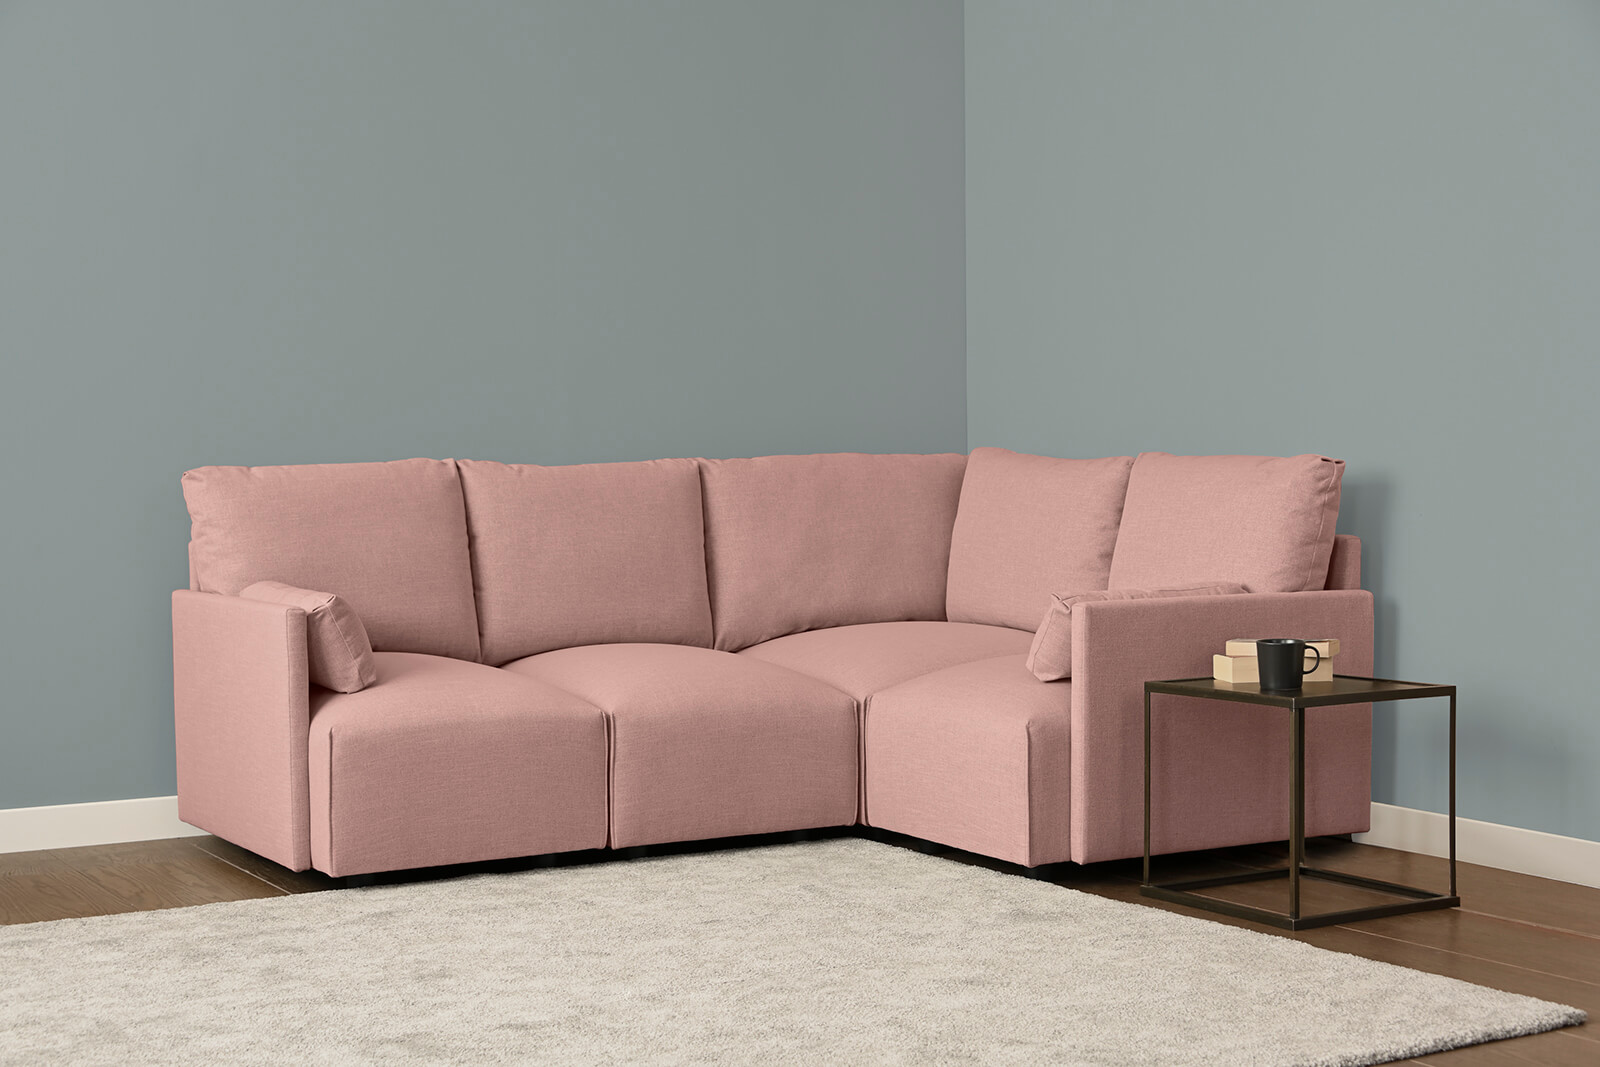 HB04-small-corner-sofa-3q-rosewater-3x2-lifestyle